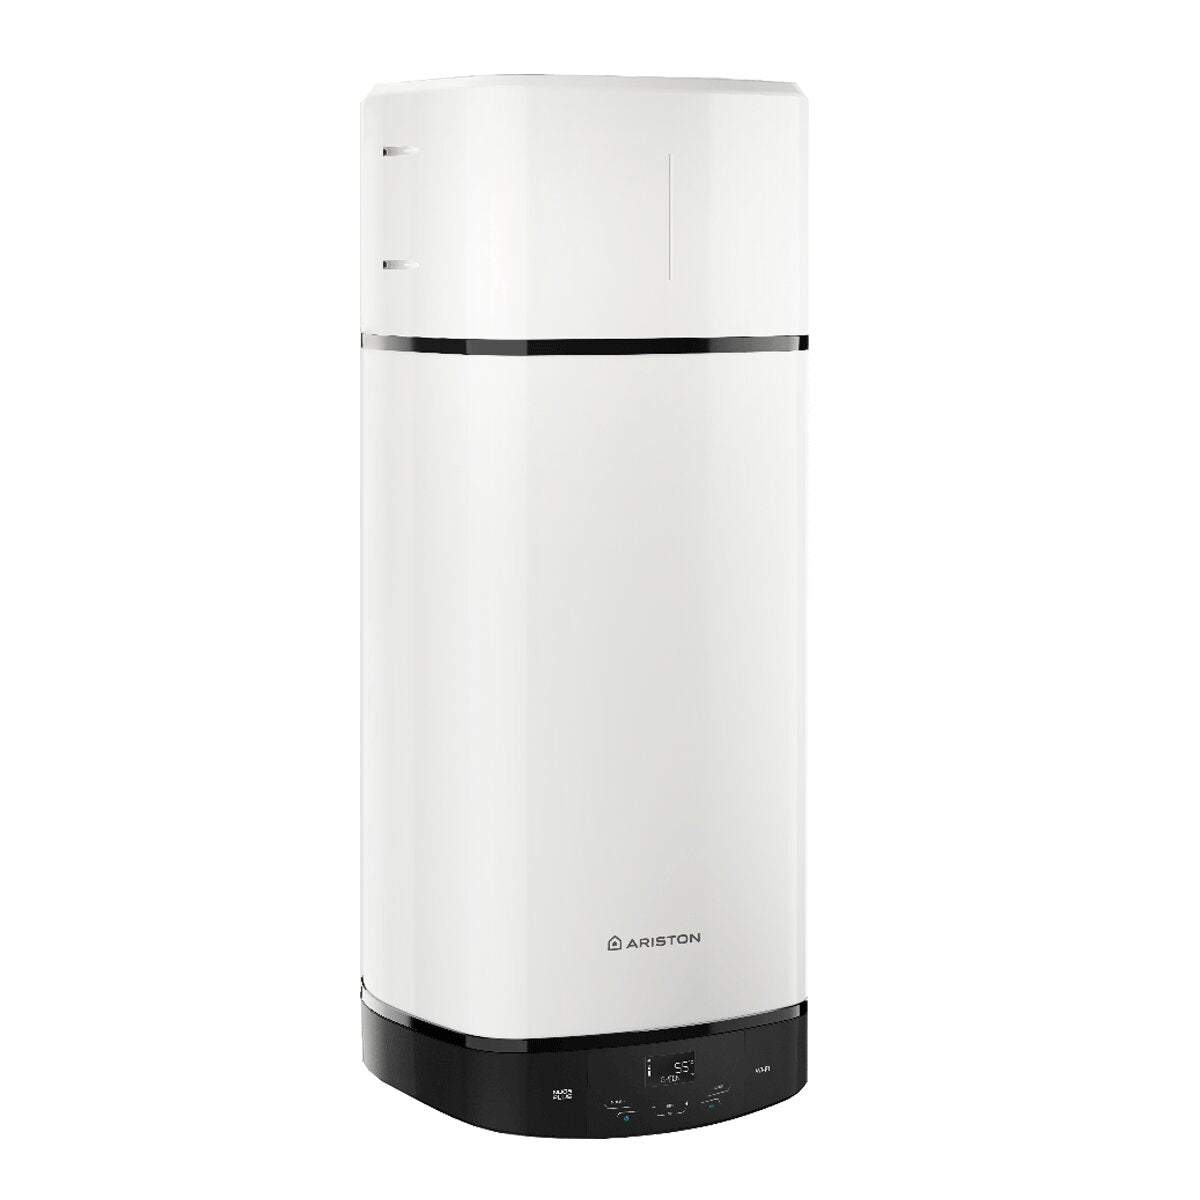 Ariston Nuos Plus R290 S2 WiFi A+ 150 Liter heat pump water heater